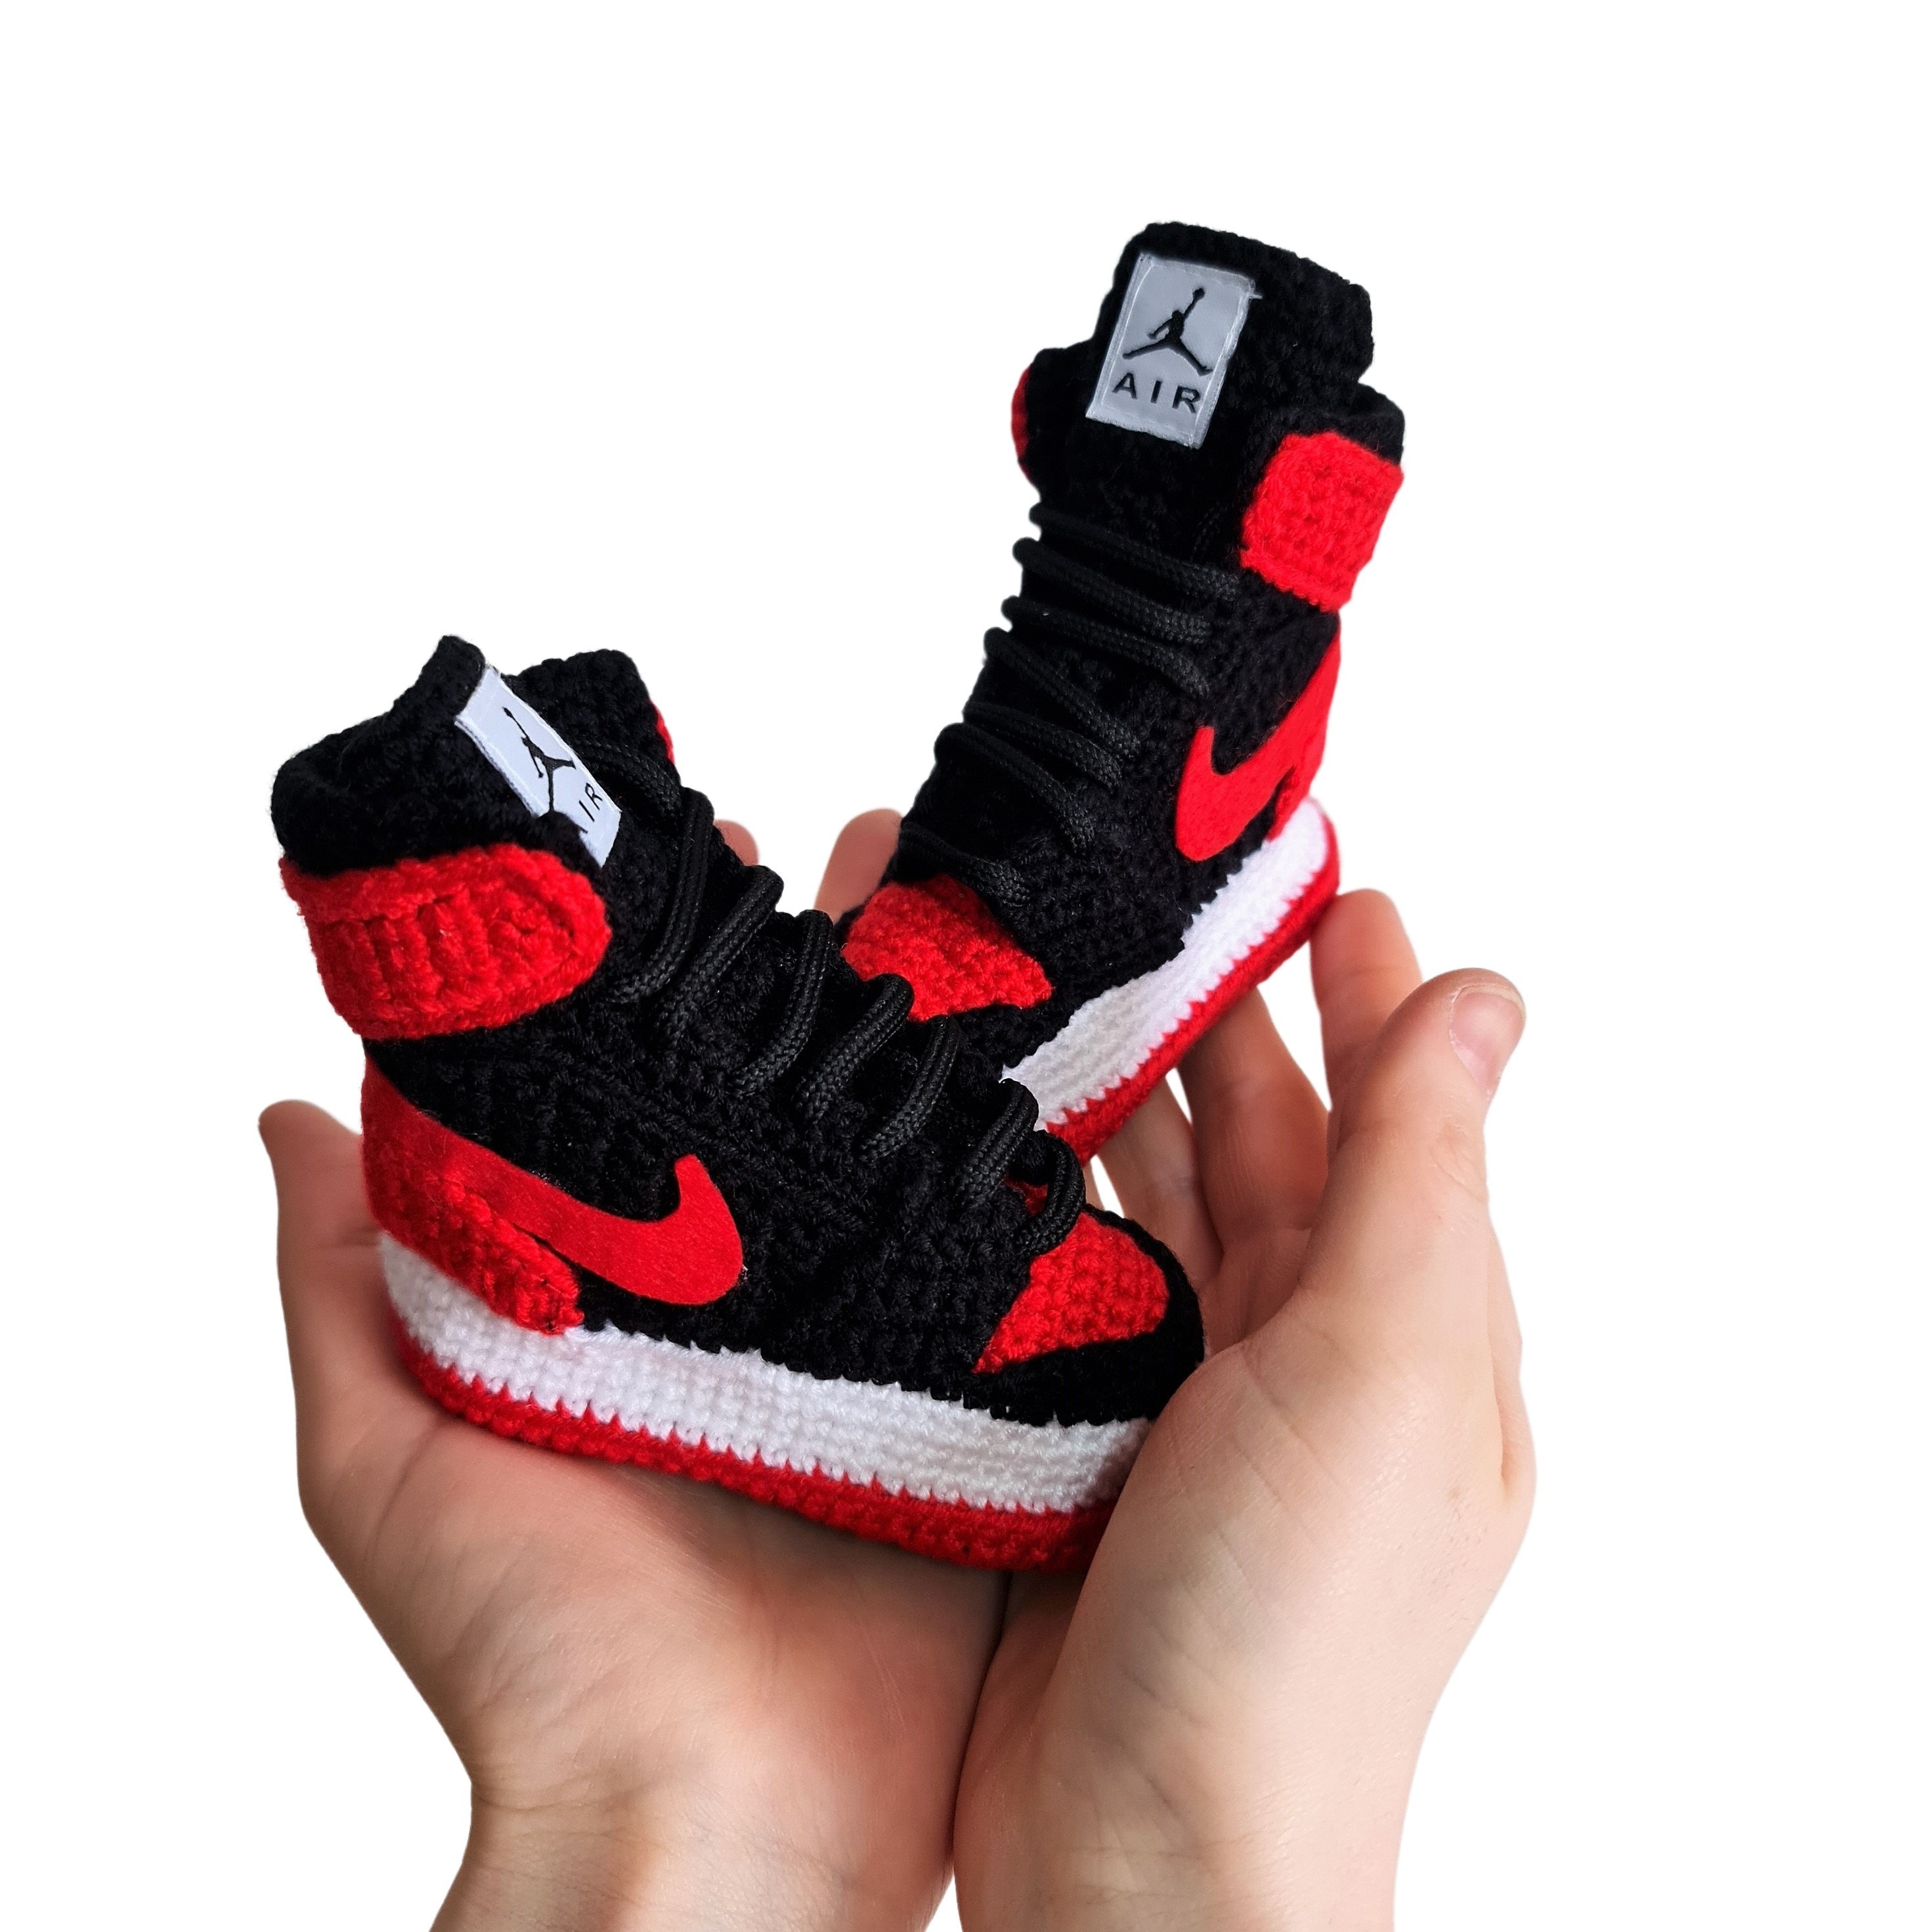 Air Jordan Baby - Etsy